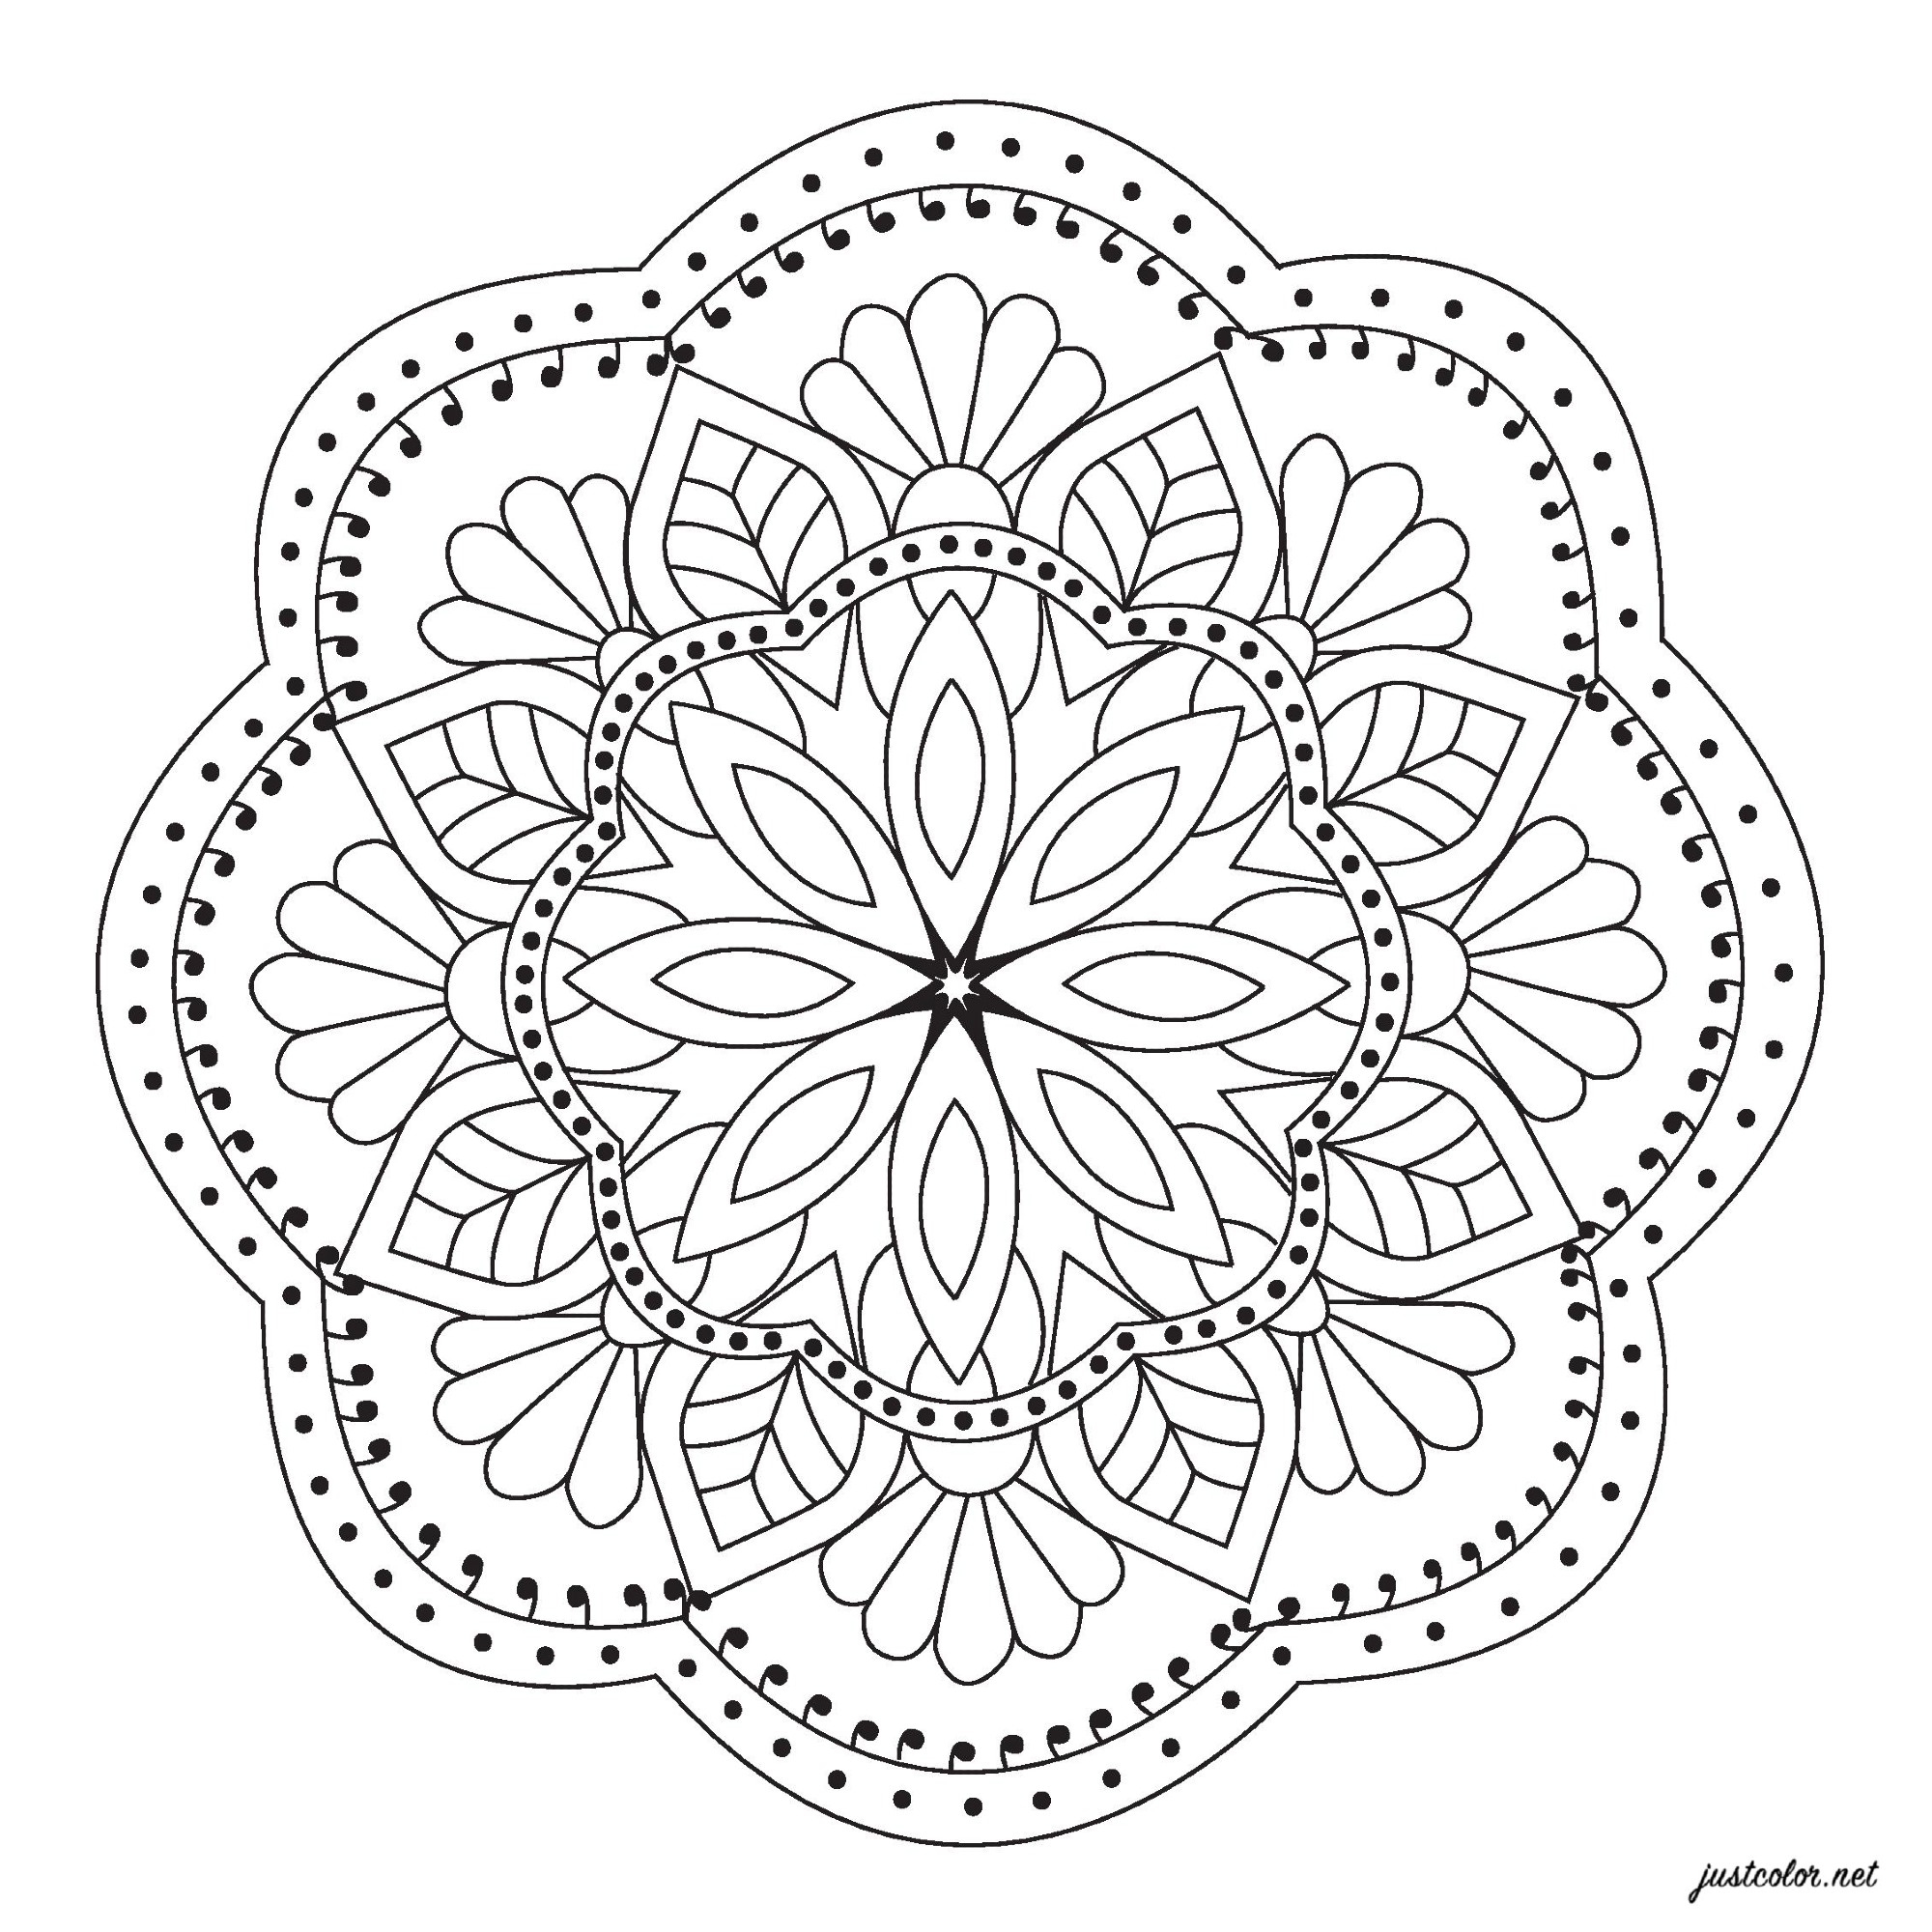 Simple flower forming a Mandala